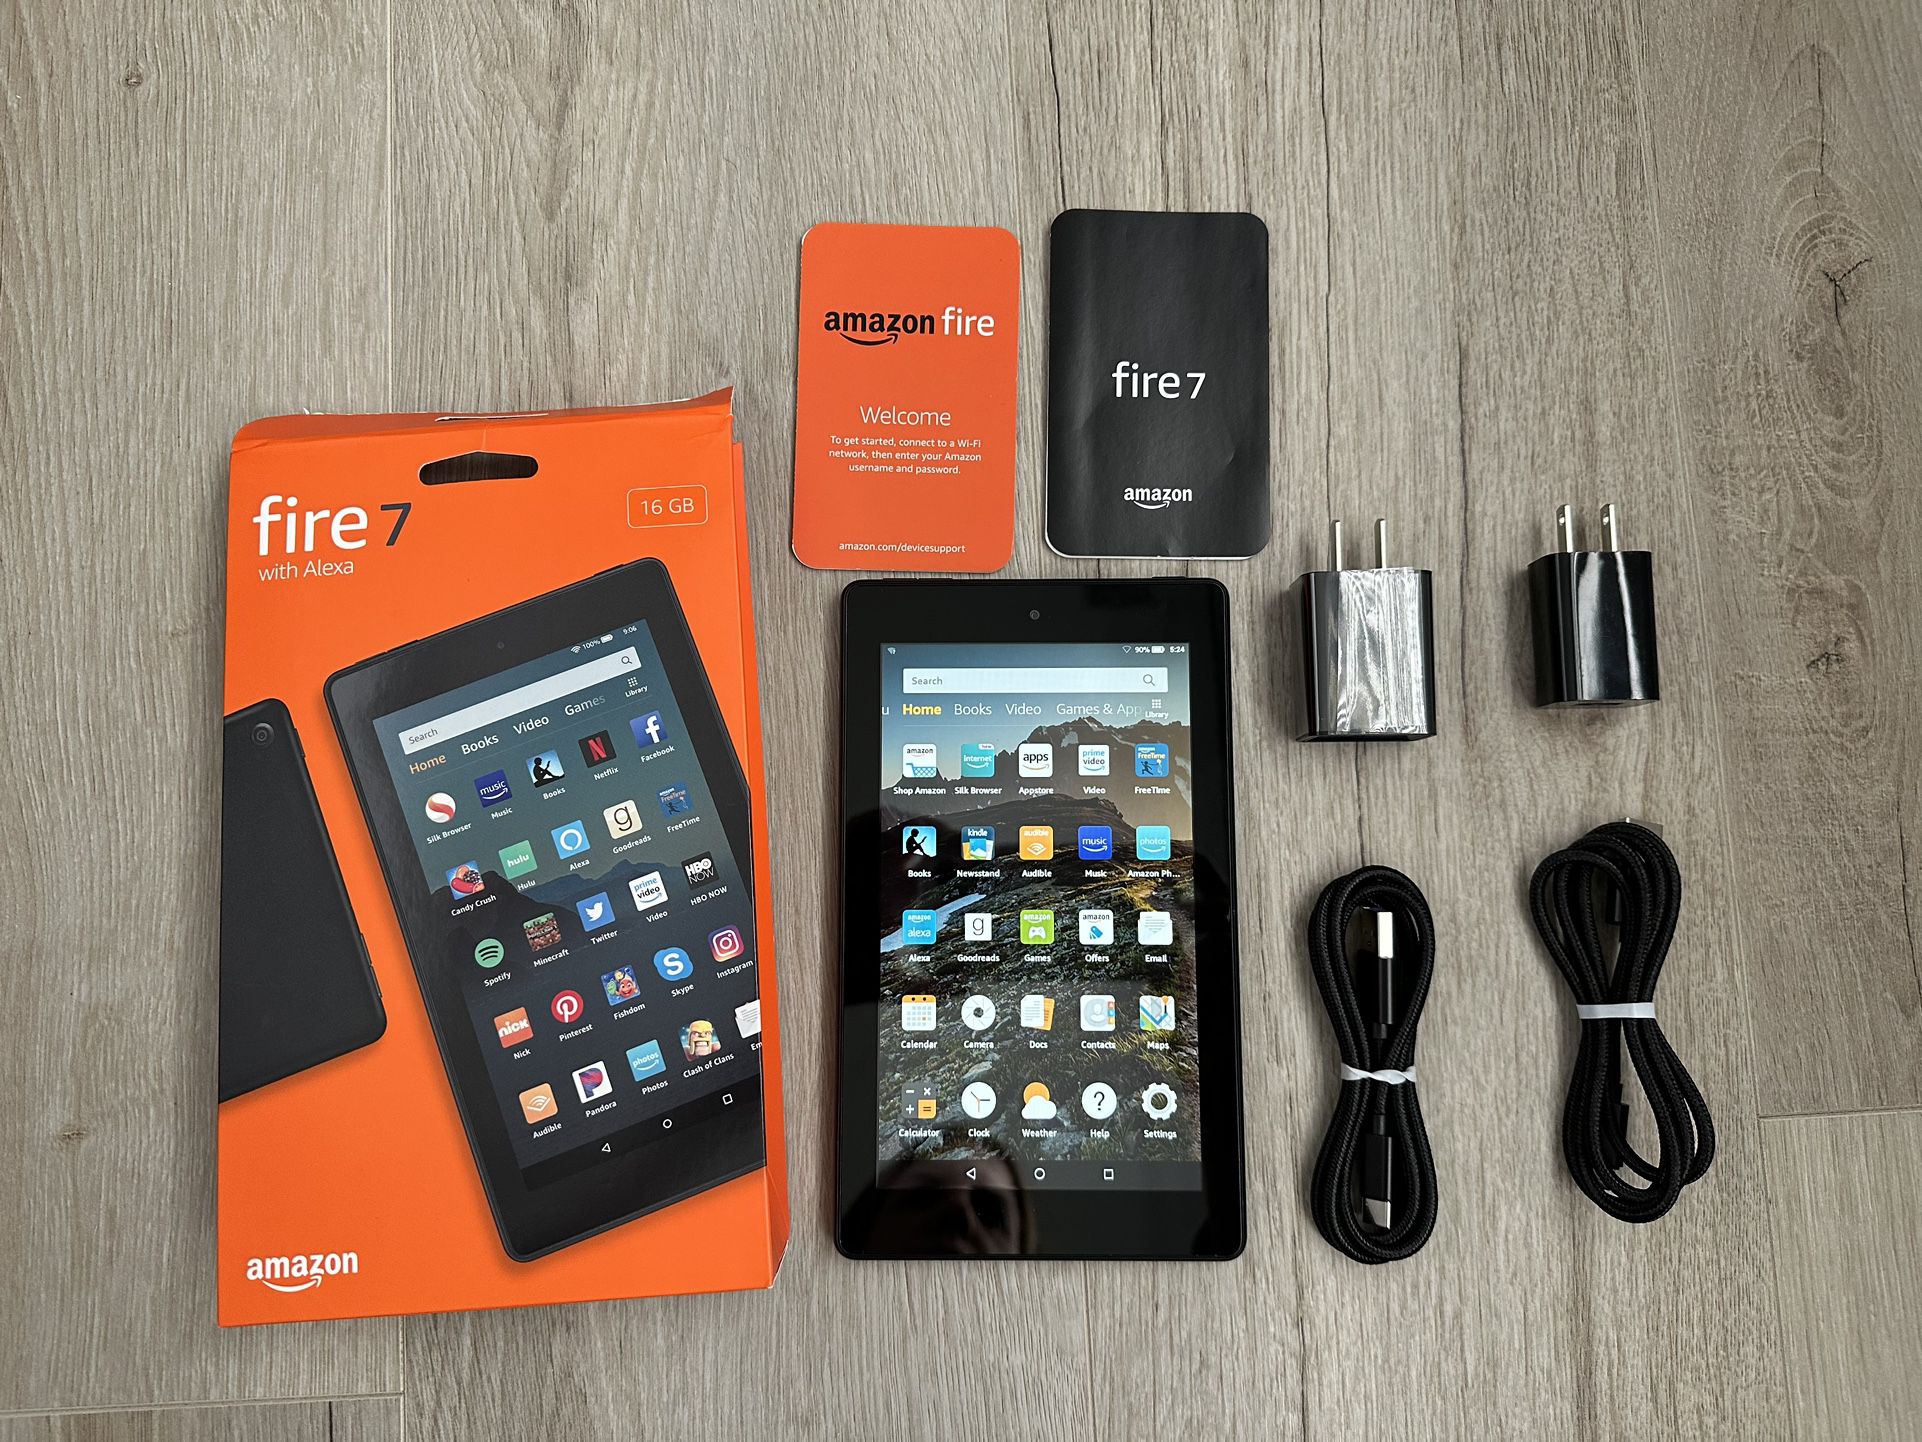 Amazon Fire7 with Alexa Tablet